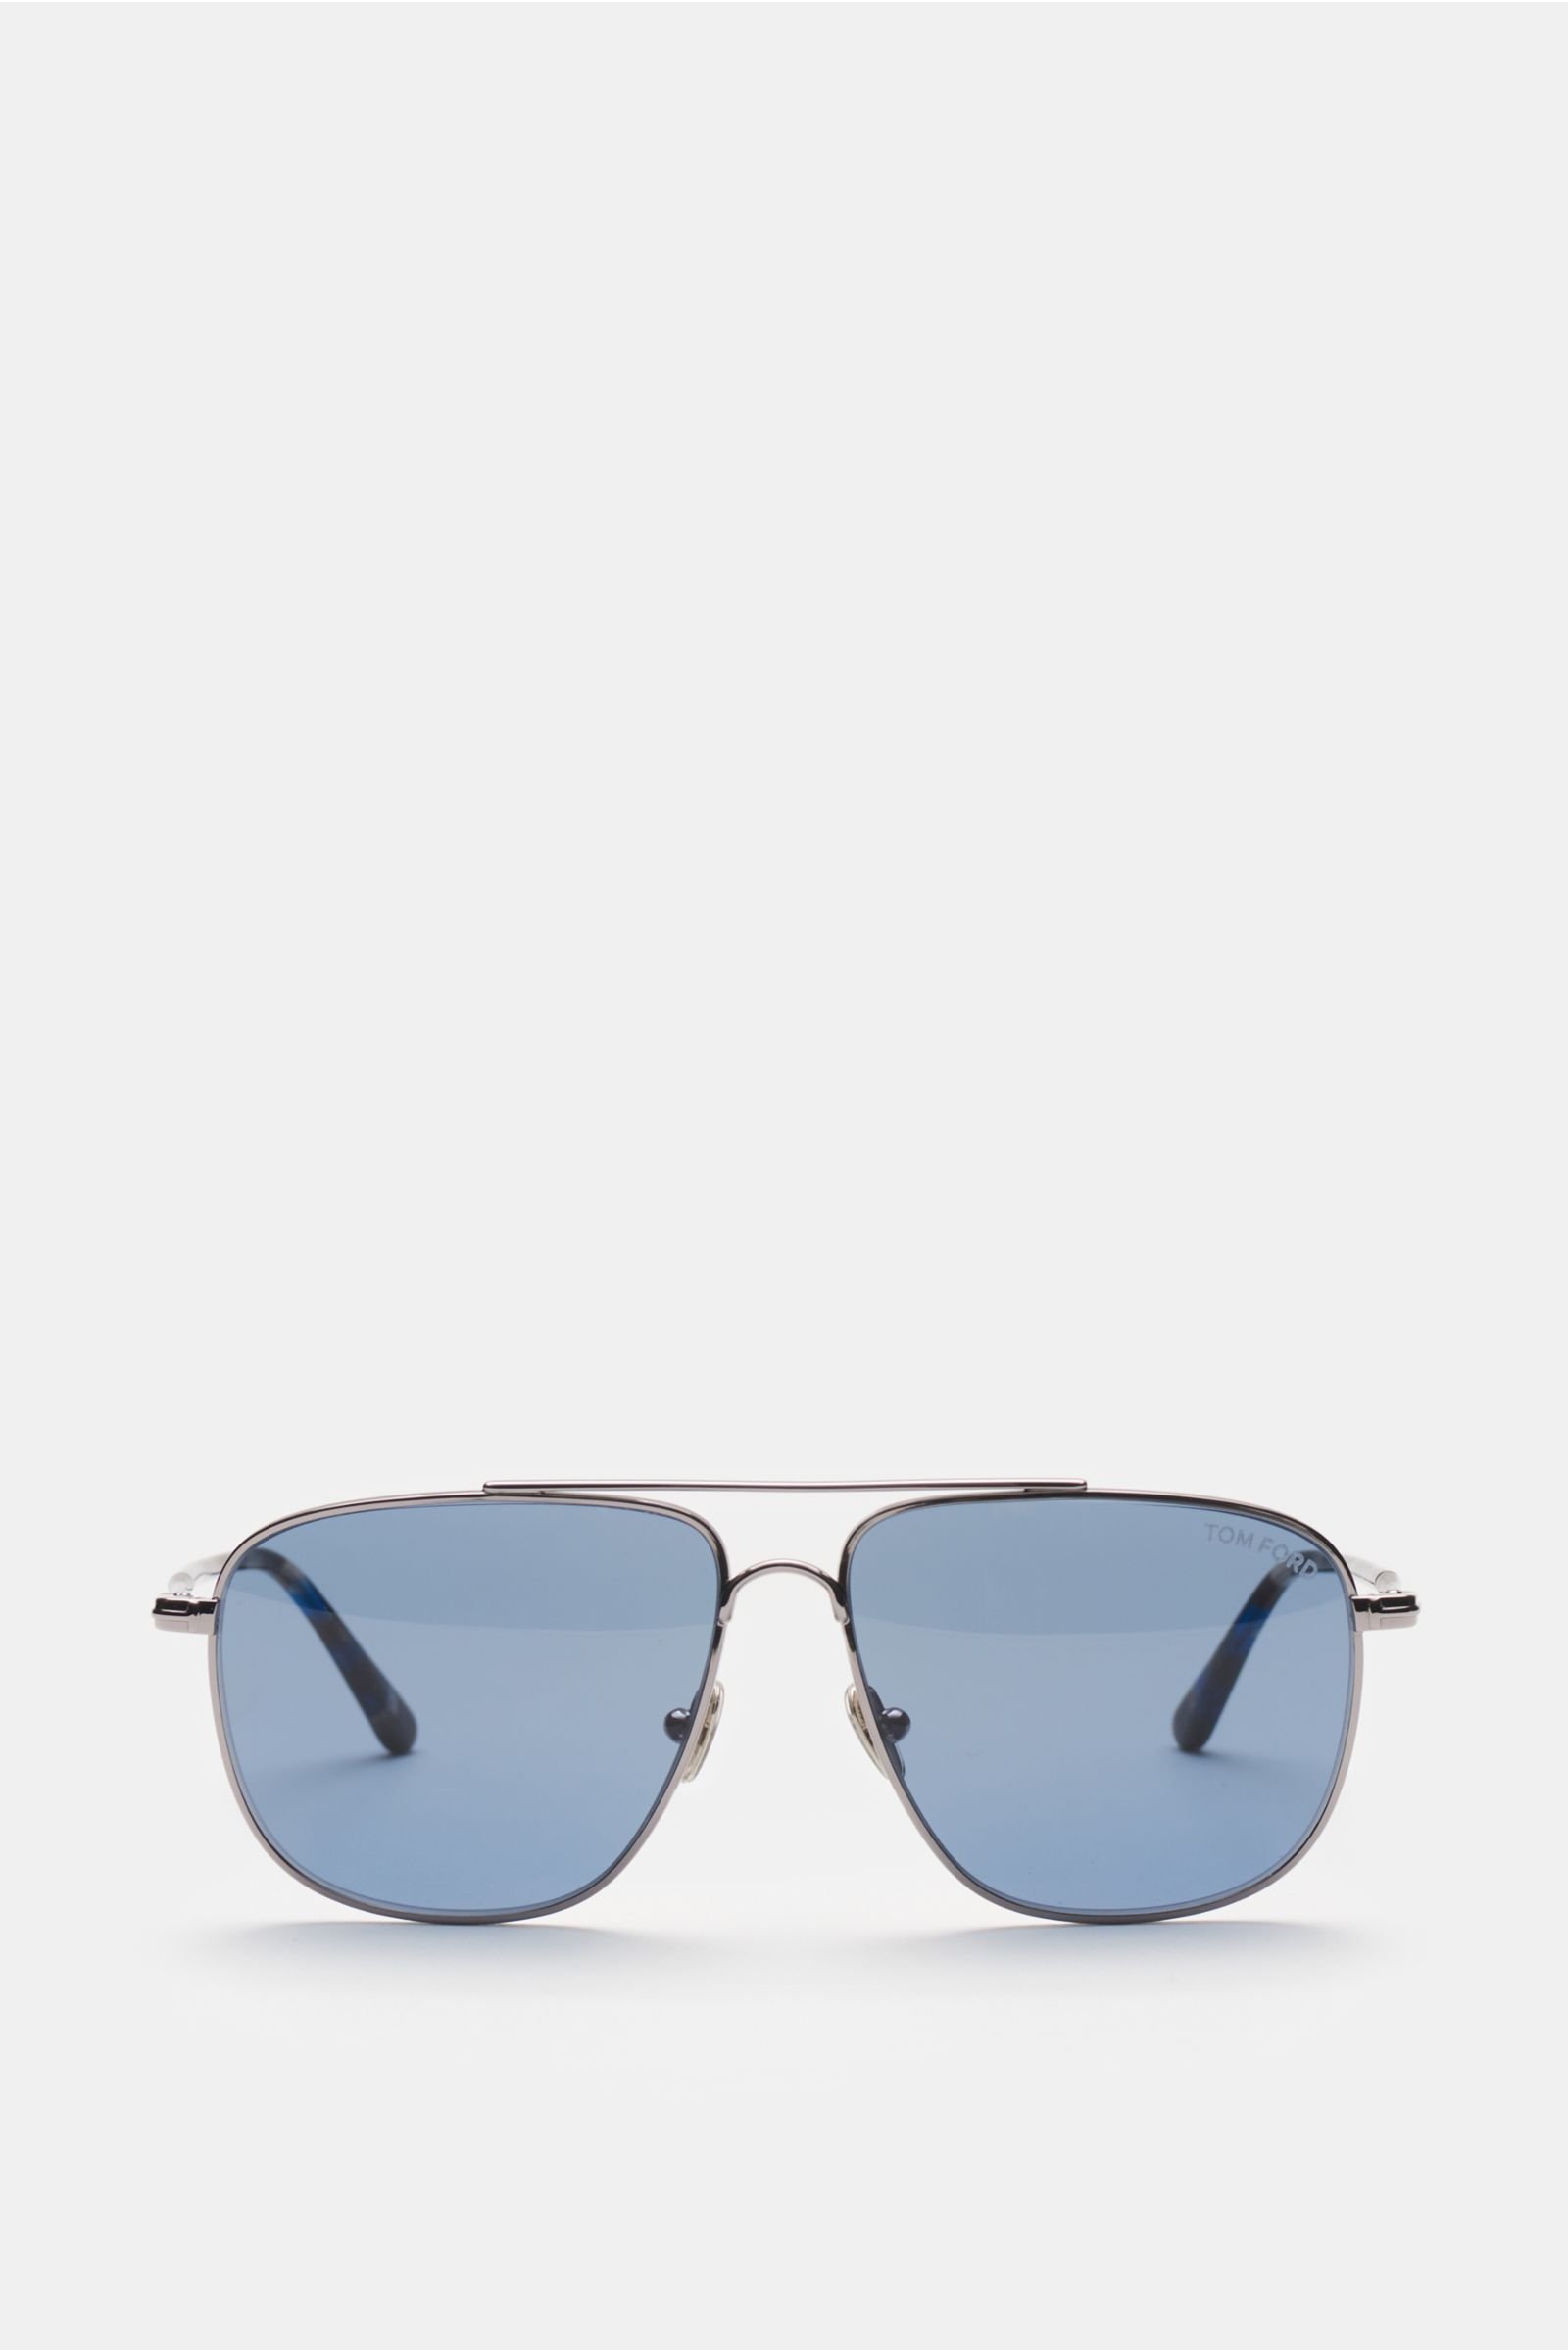 Sonnenbrille 'Len' silber/braun gemustert/blau